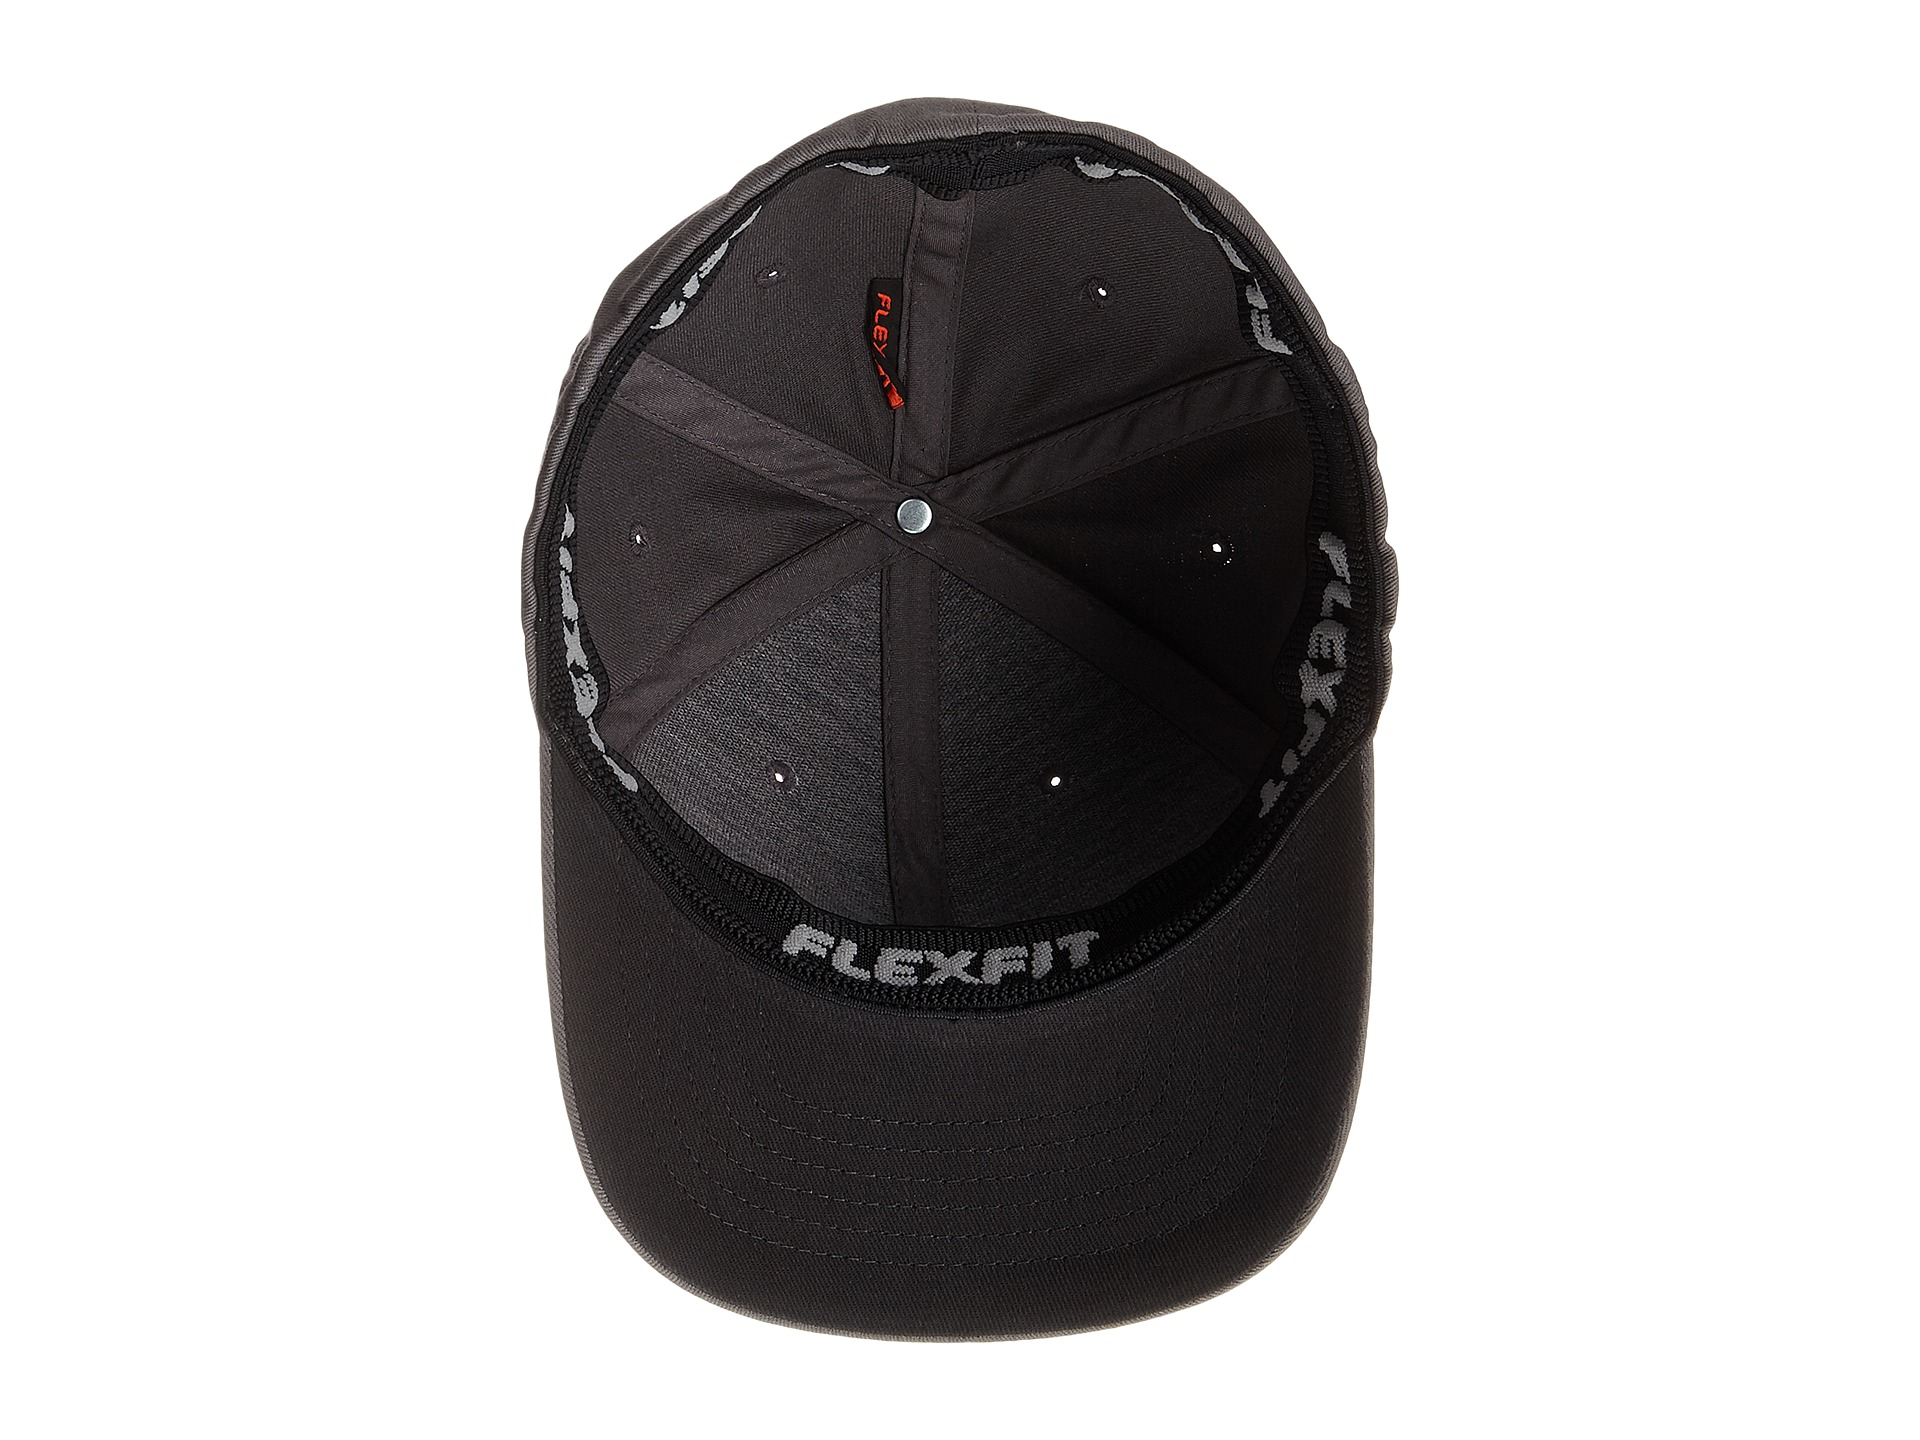 north face flex fit hat